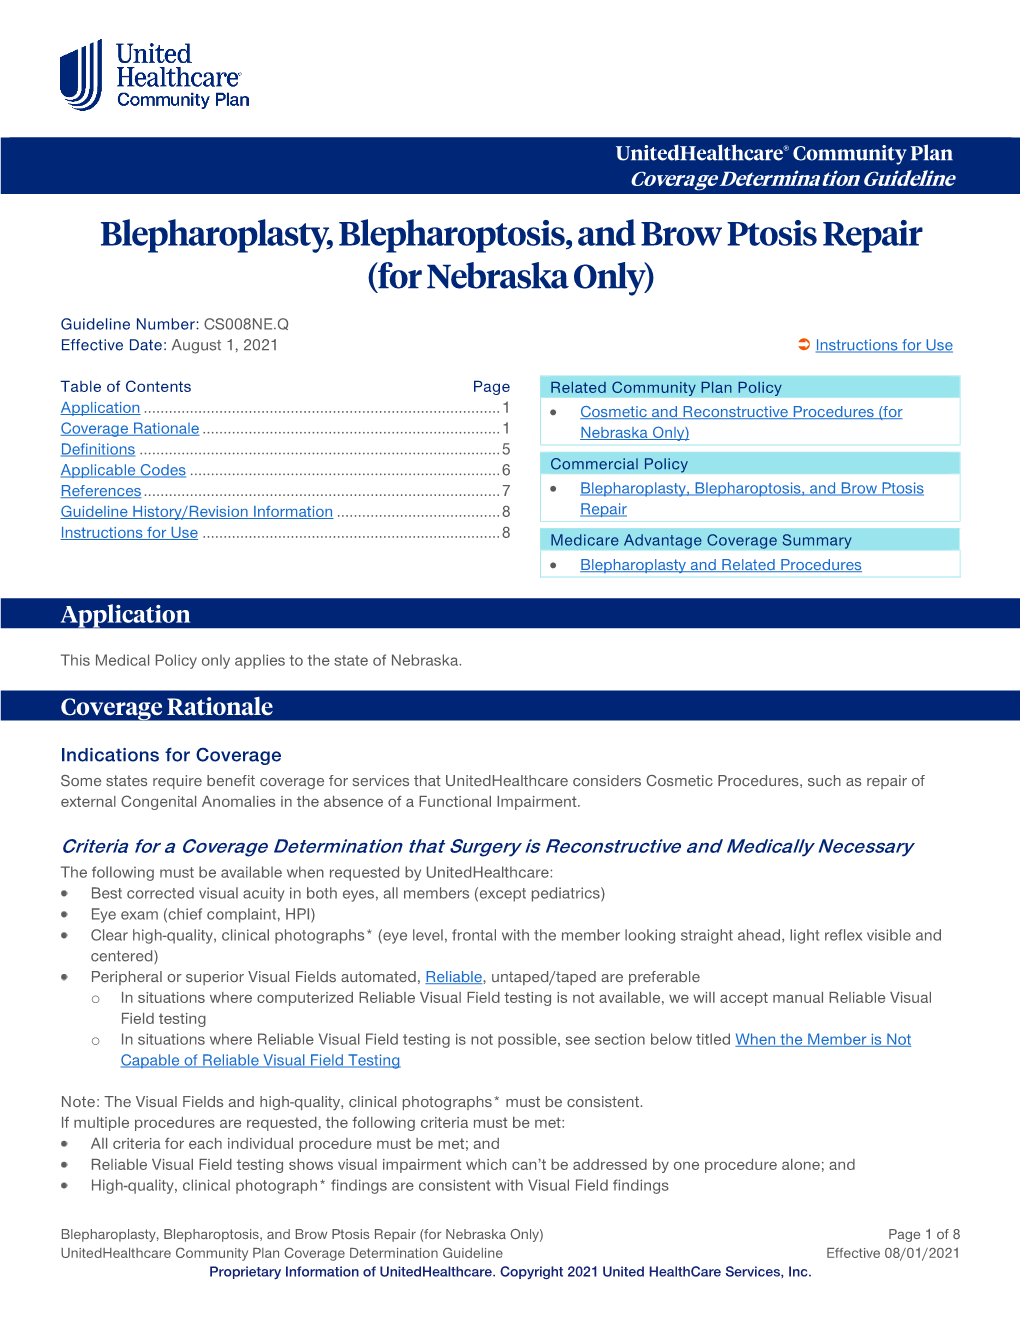 Blepharoplasty, Blepharoptosis, and Brow Ptosis Repair (For Nebraska Only)